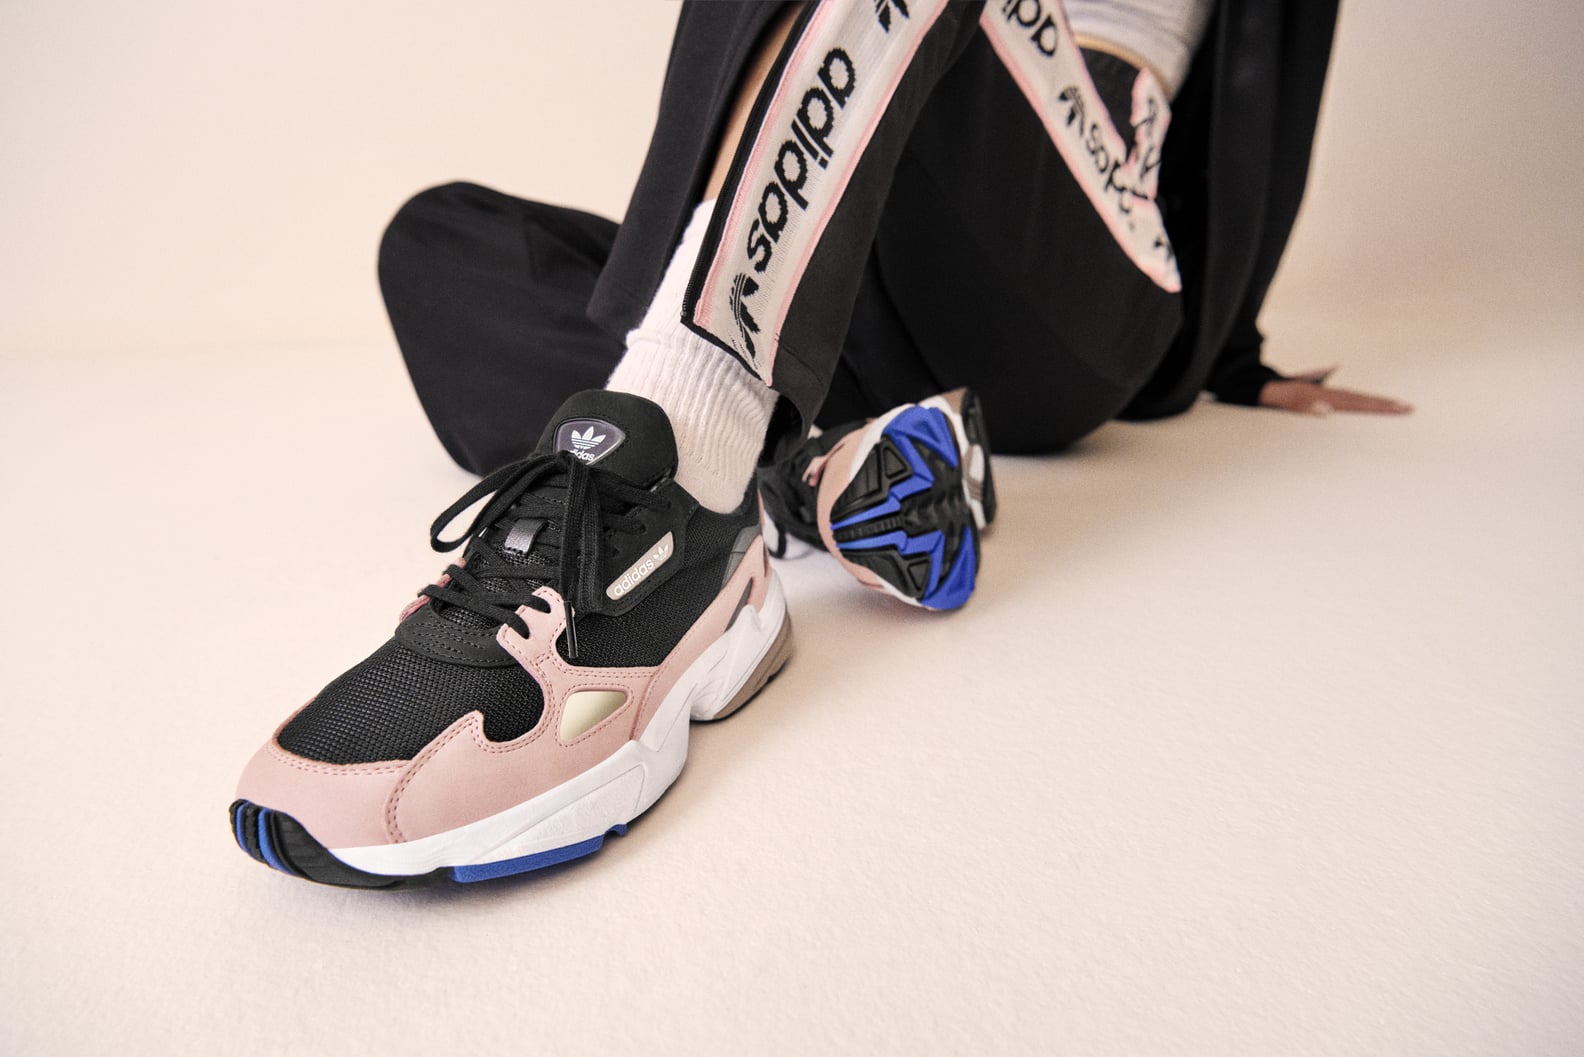 Kylie Jenner Adidas Falcon Sneakers 2018 | POPSUGAR Fashion